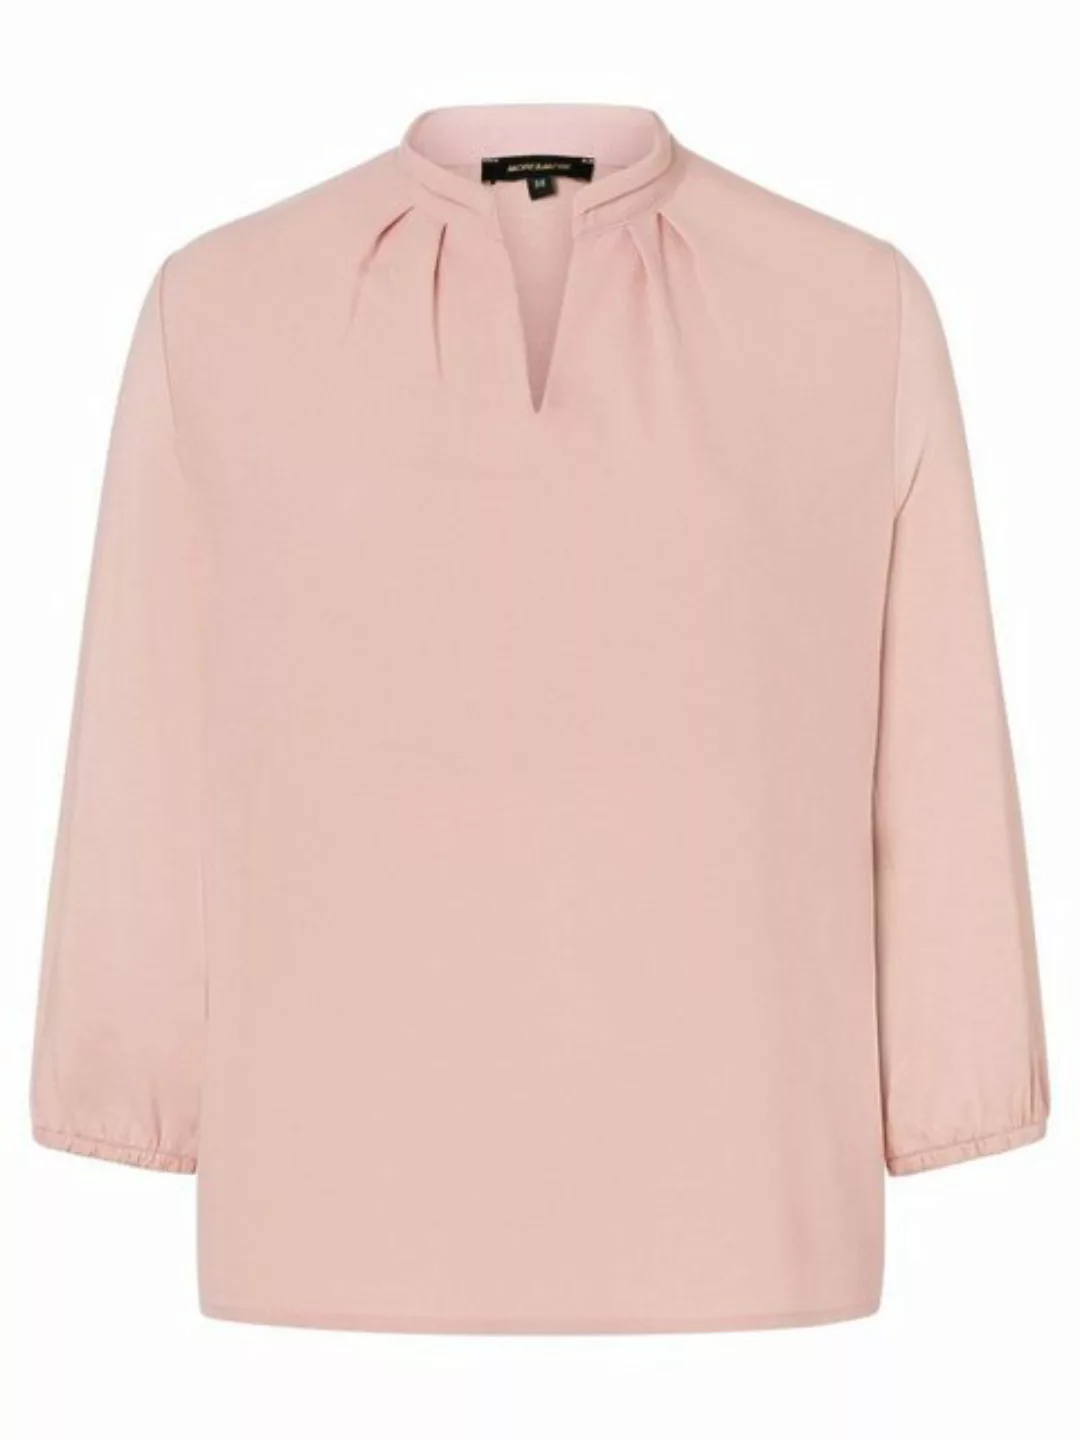 Blusenshirt, 3/4 Arm, rosa, Frühjahrs-Kollektion günstig online kaufen